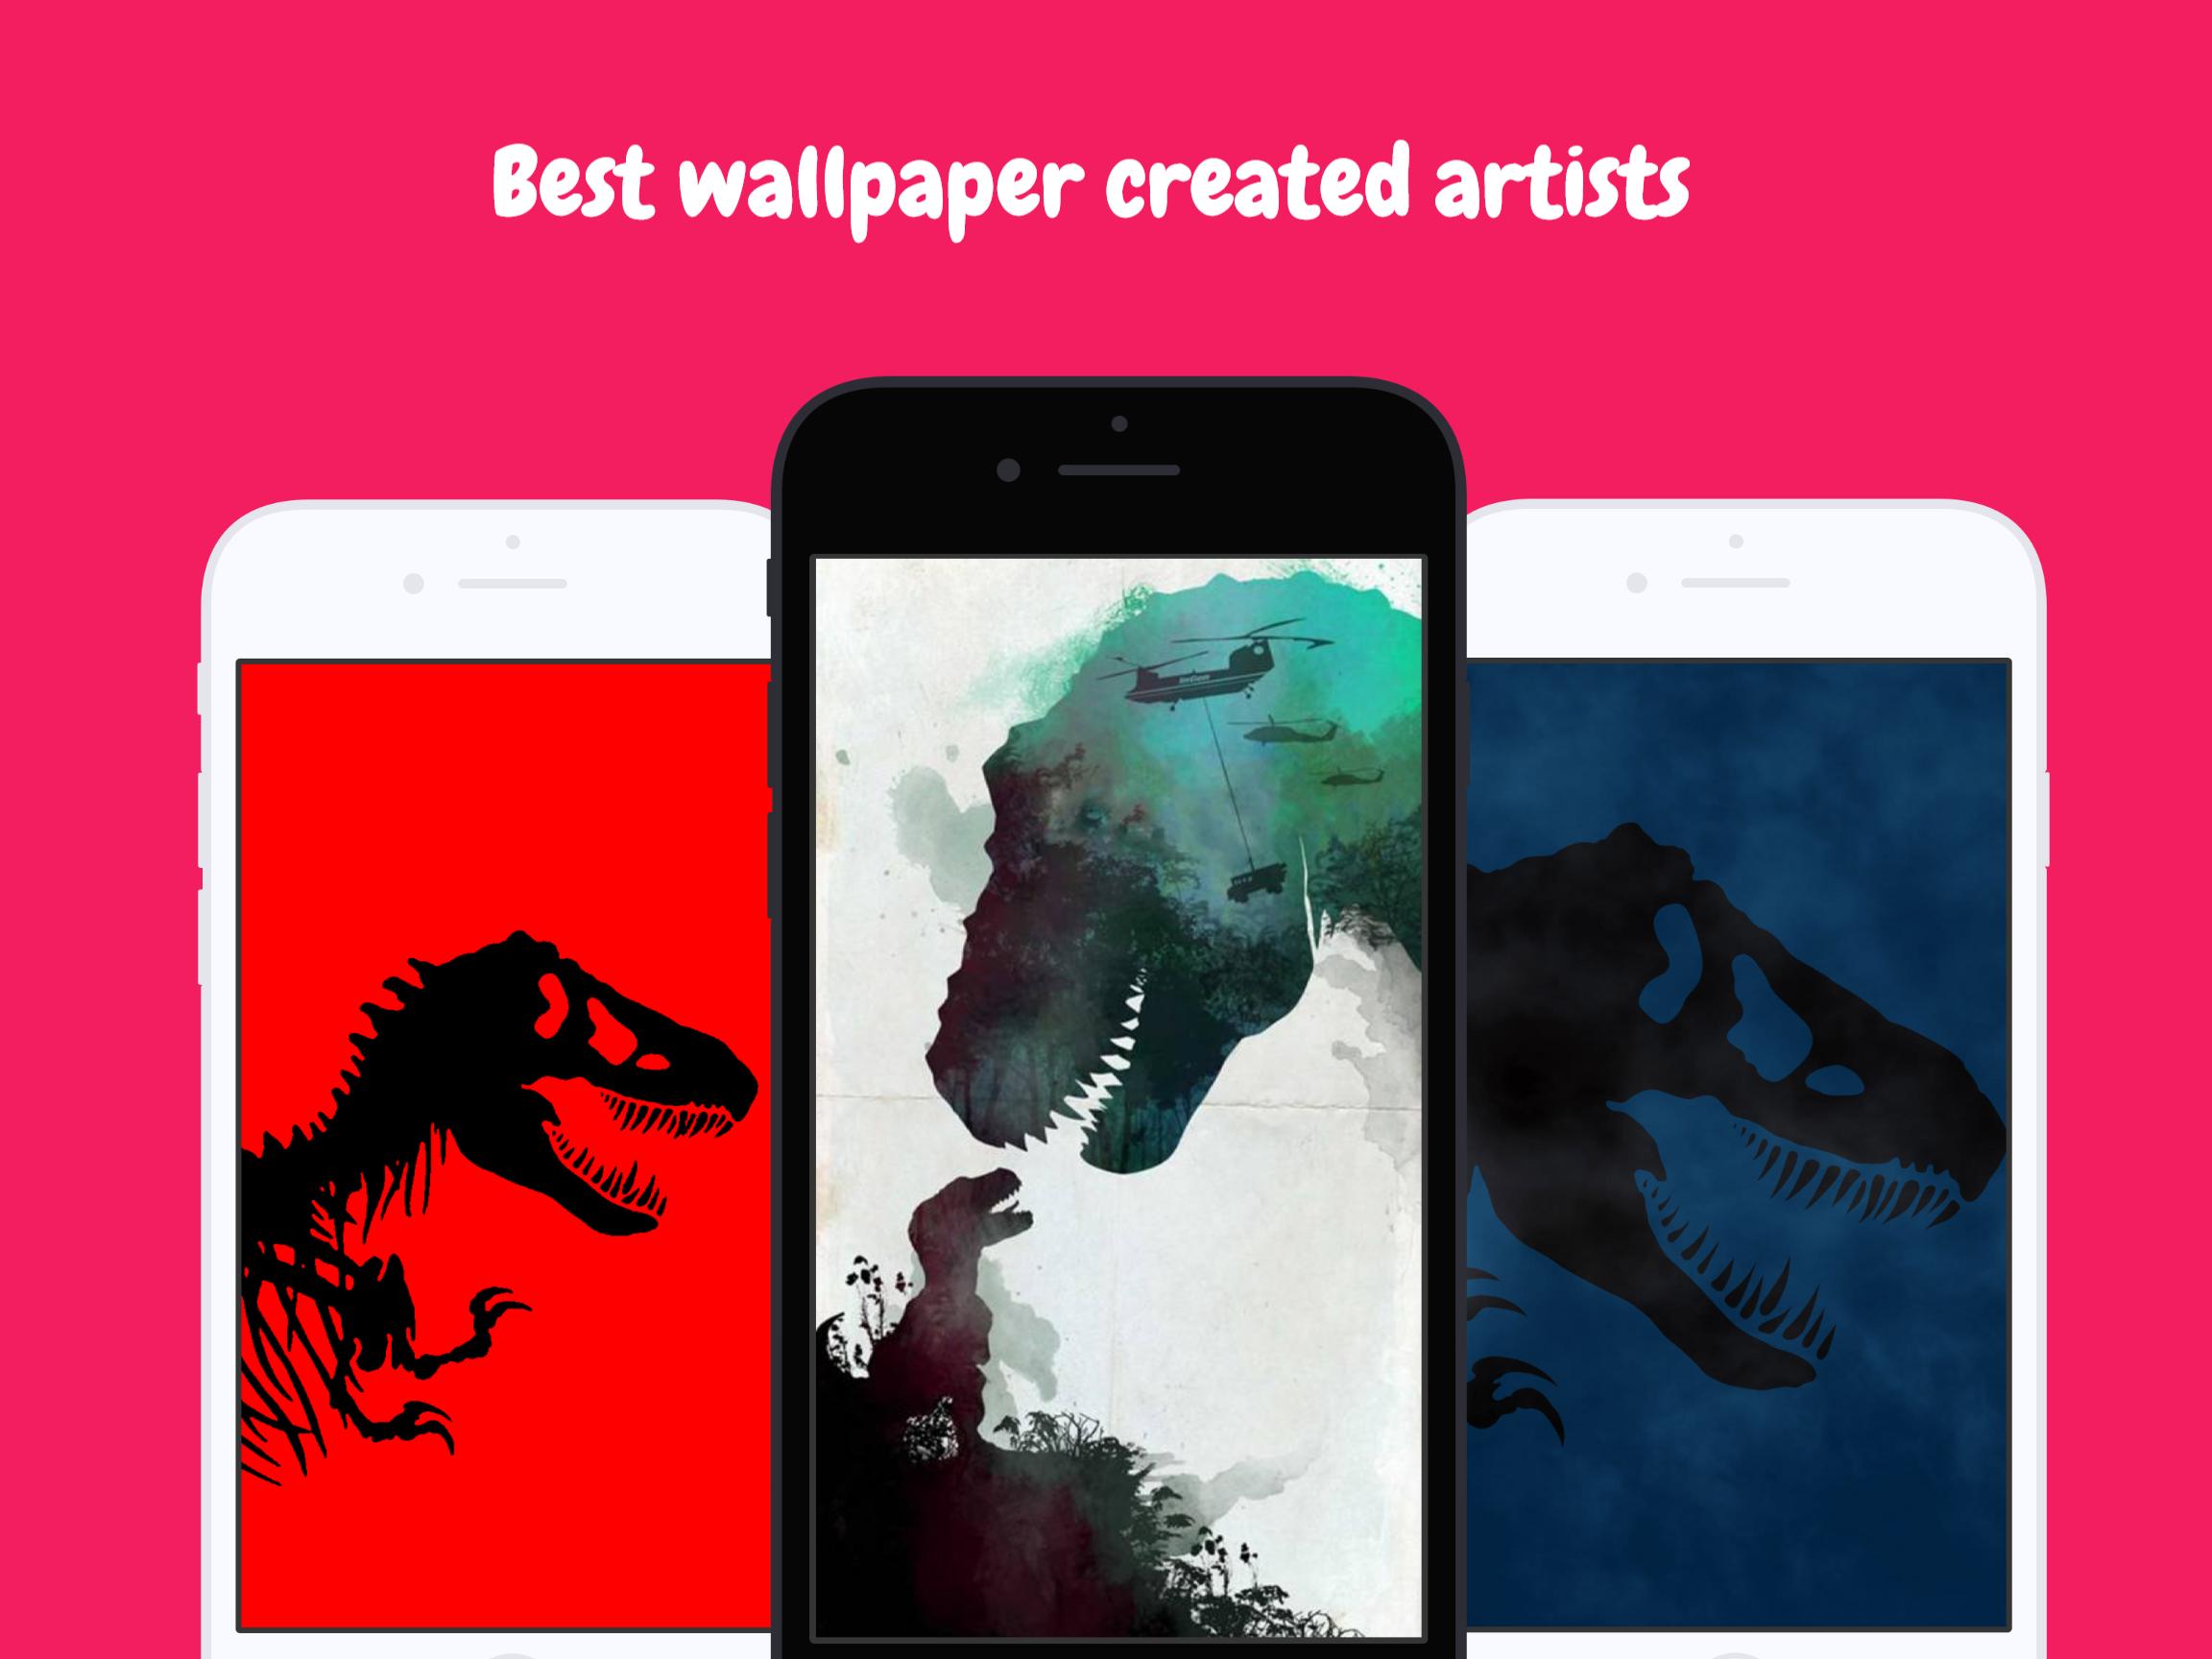 Jurassic World Wallpaper For Android Apk